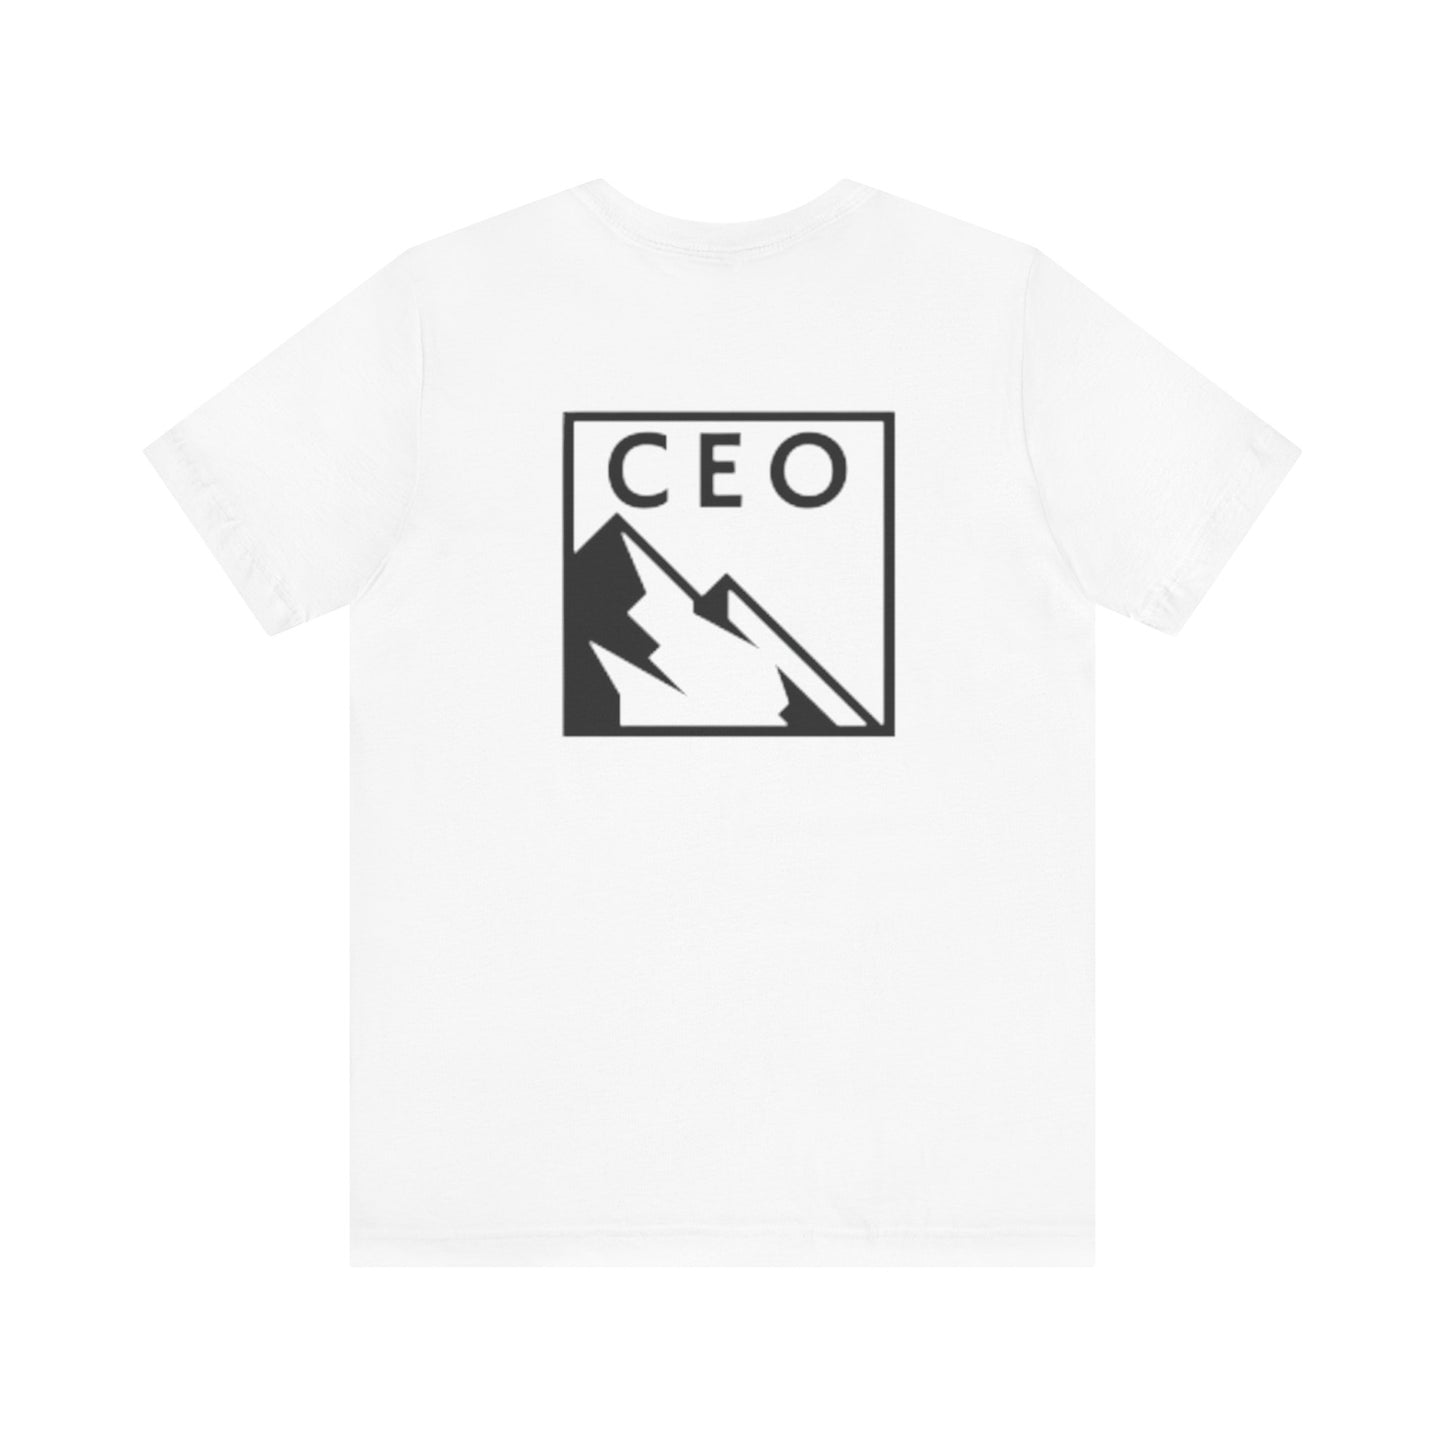 New CEO T-shirts (Black print)